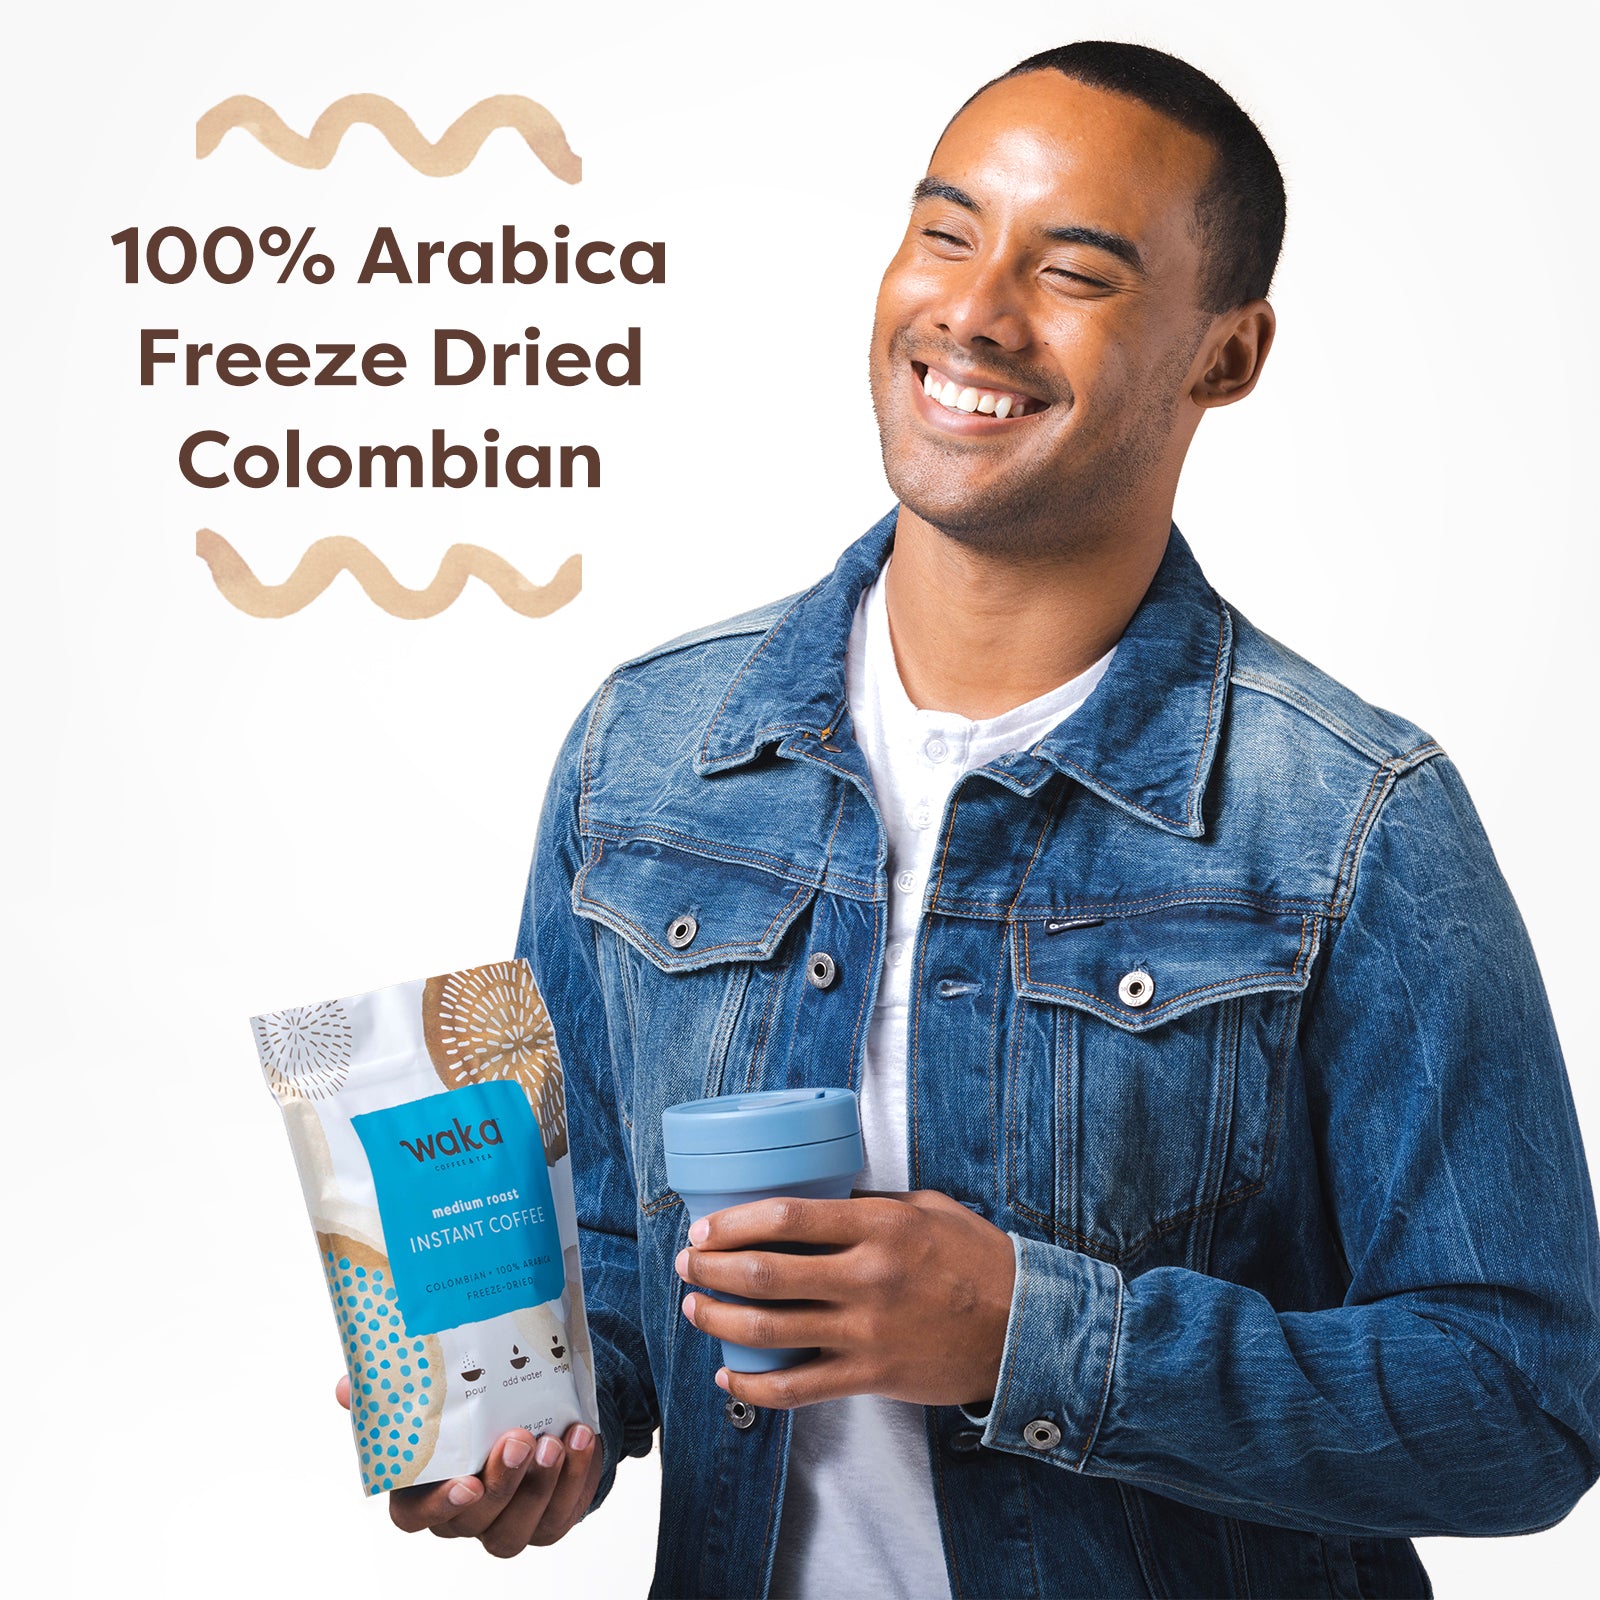 Medium Roast Colombian Instant Coffee 8 oz Bag